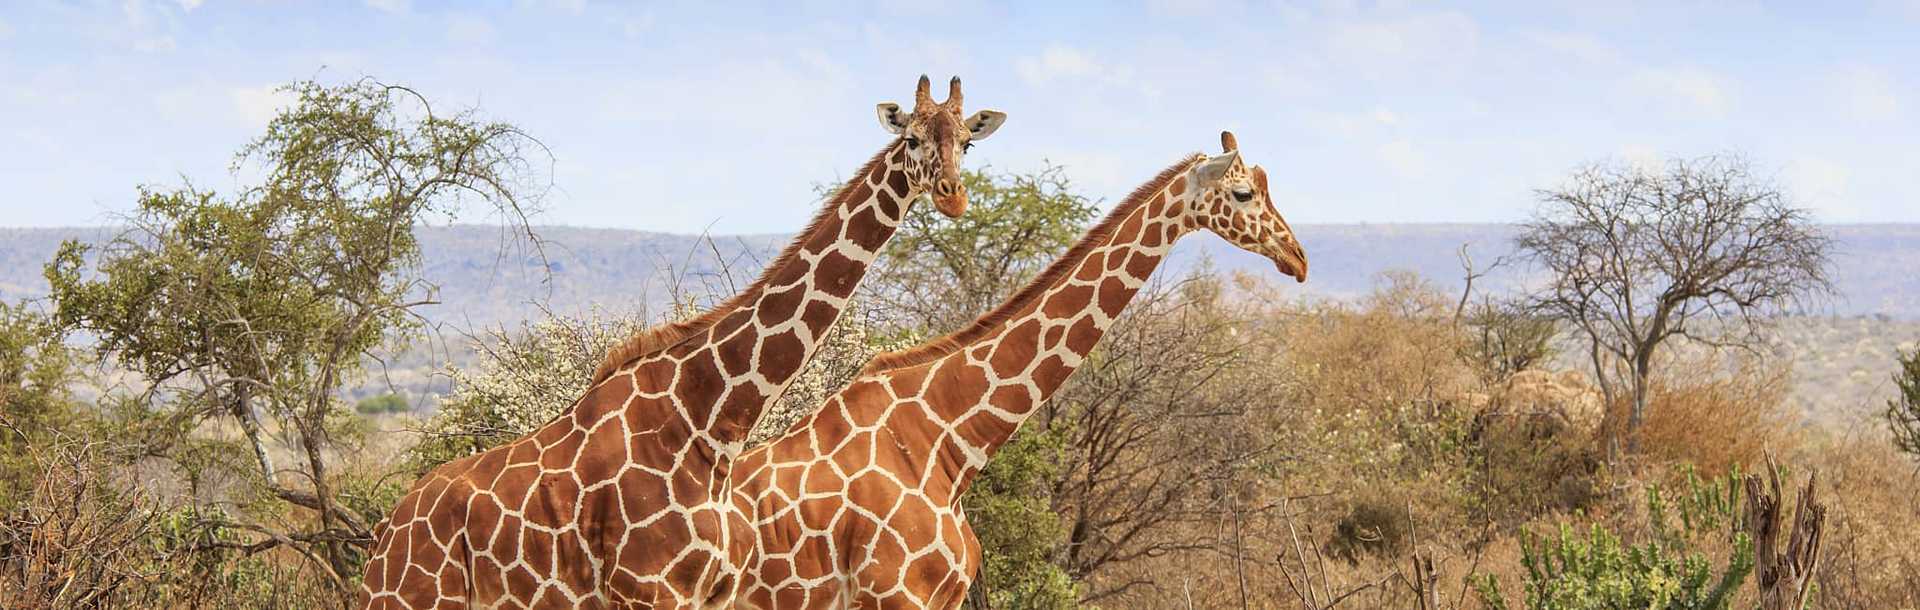 Two giraffes walking through the bush in Africa